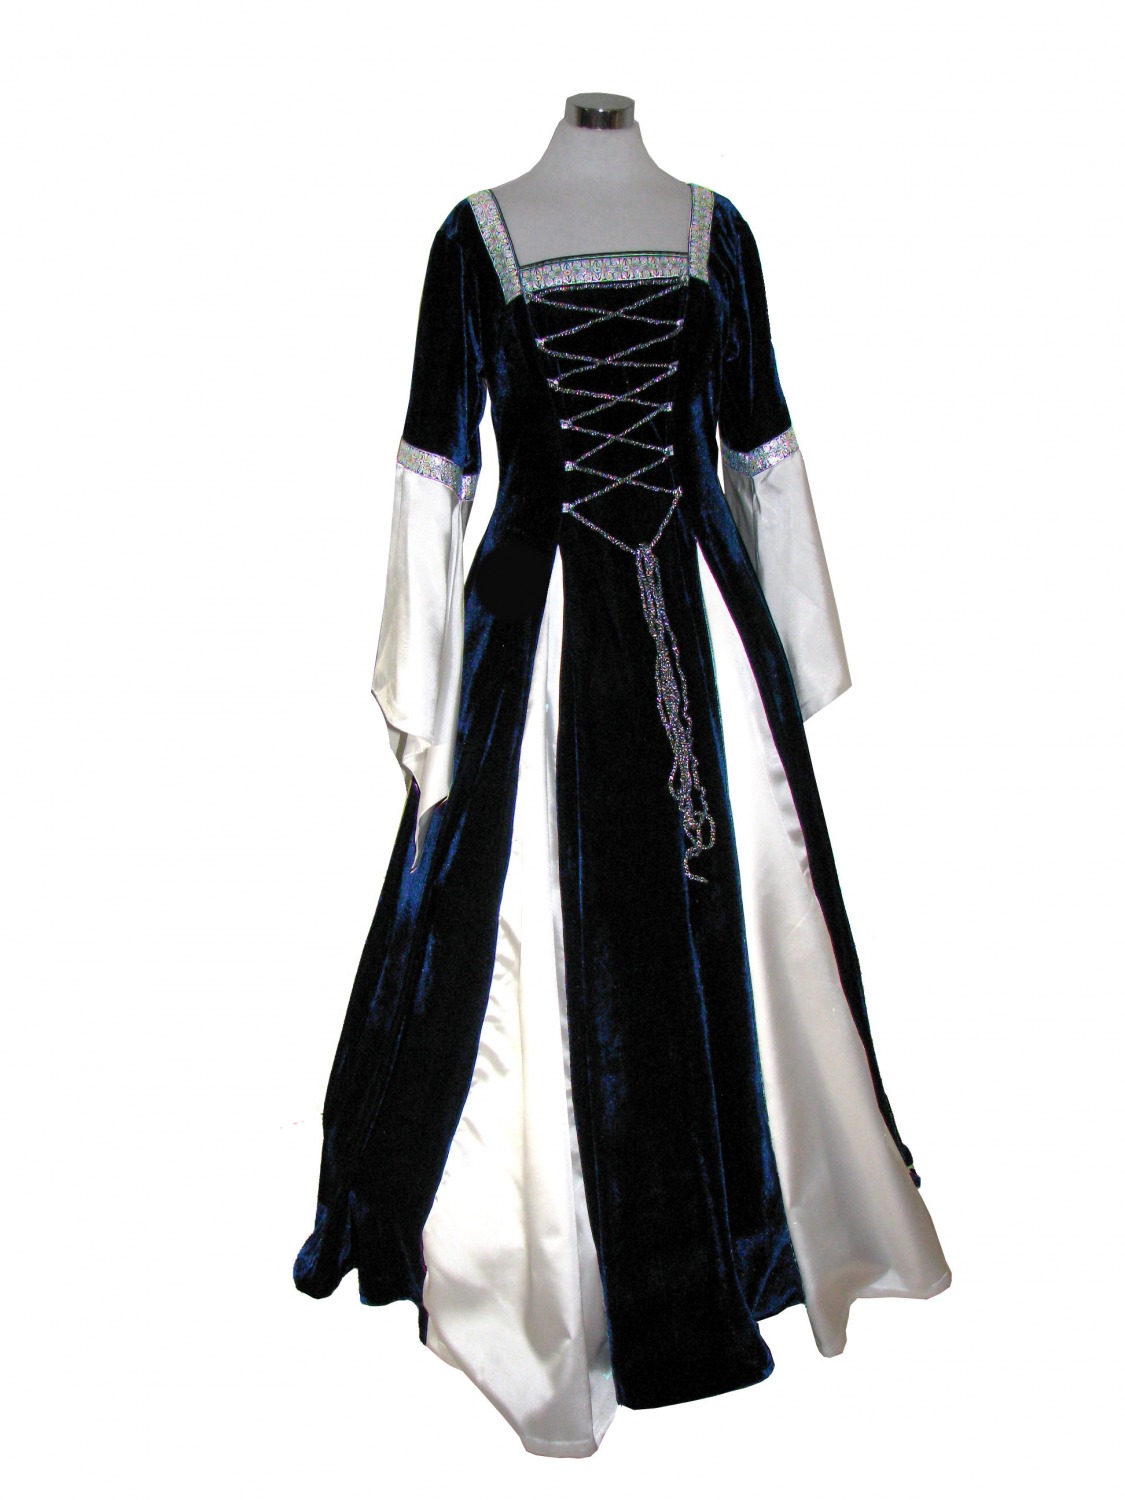 Ladies Deluxe Medieval Renaissance Costume and Headdress Size 8 - 12 Petite Shorter Length Image